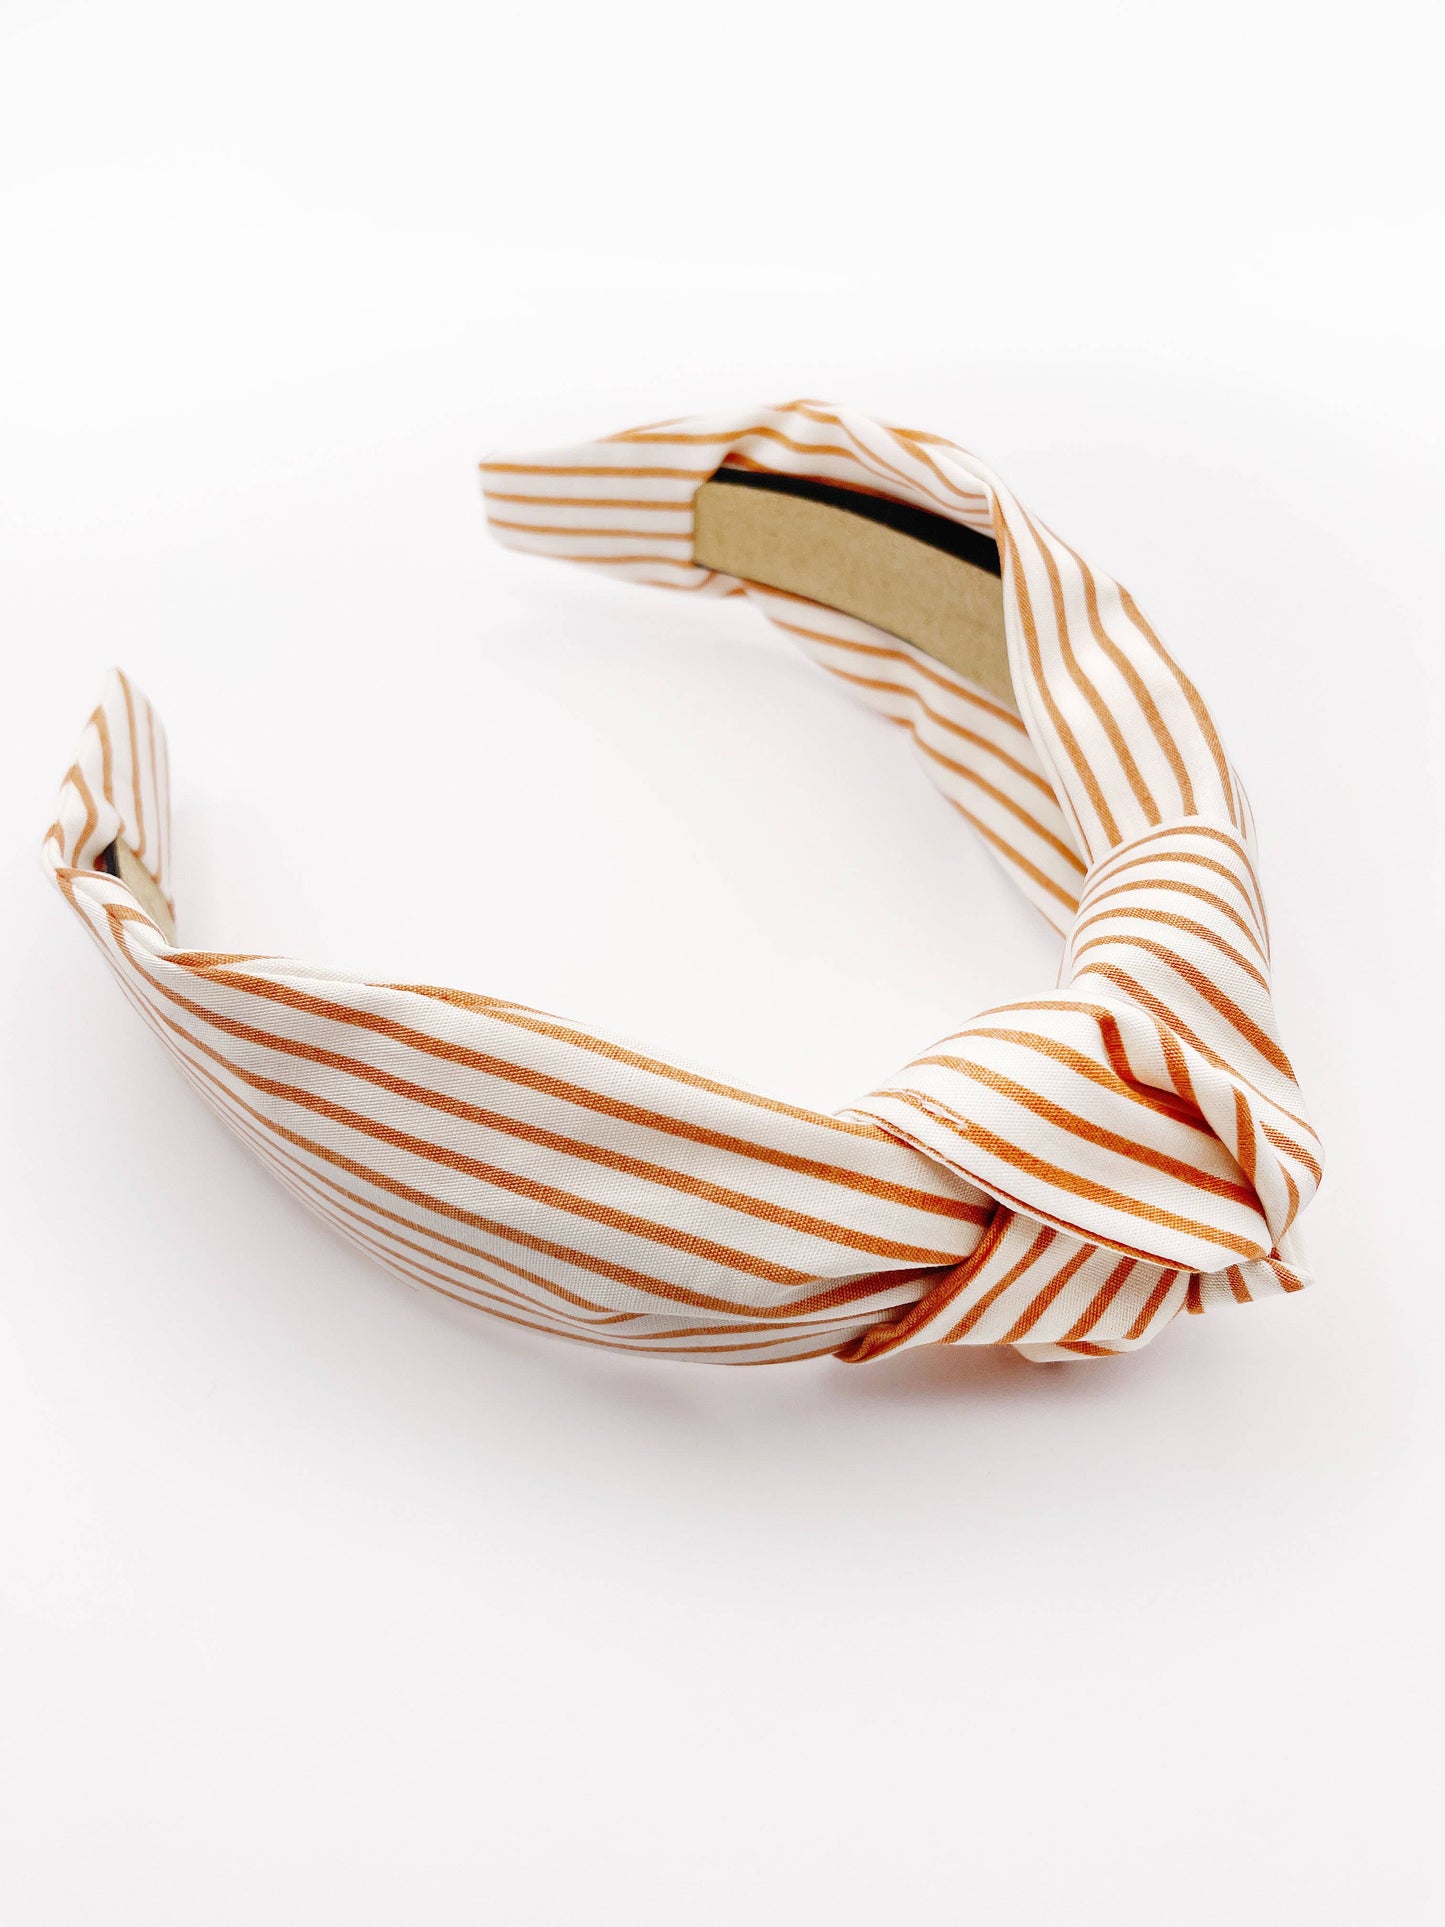 Copper Striped Knotted Headband For Women, Tan Headband